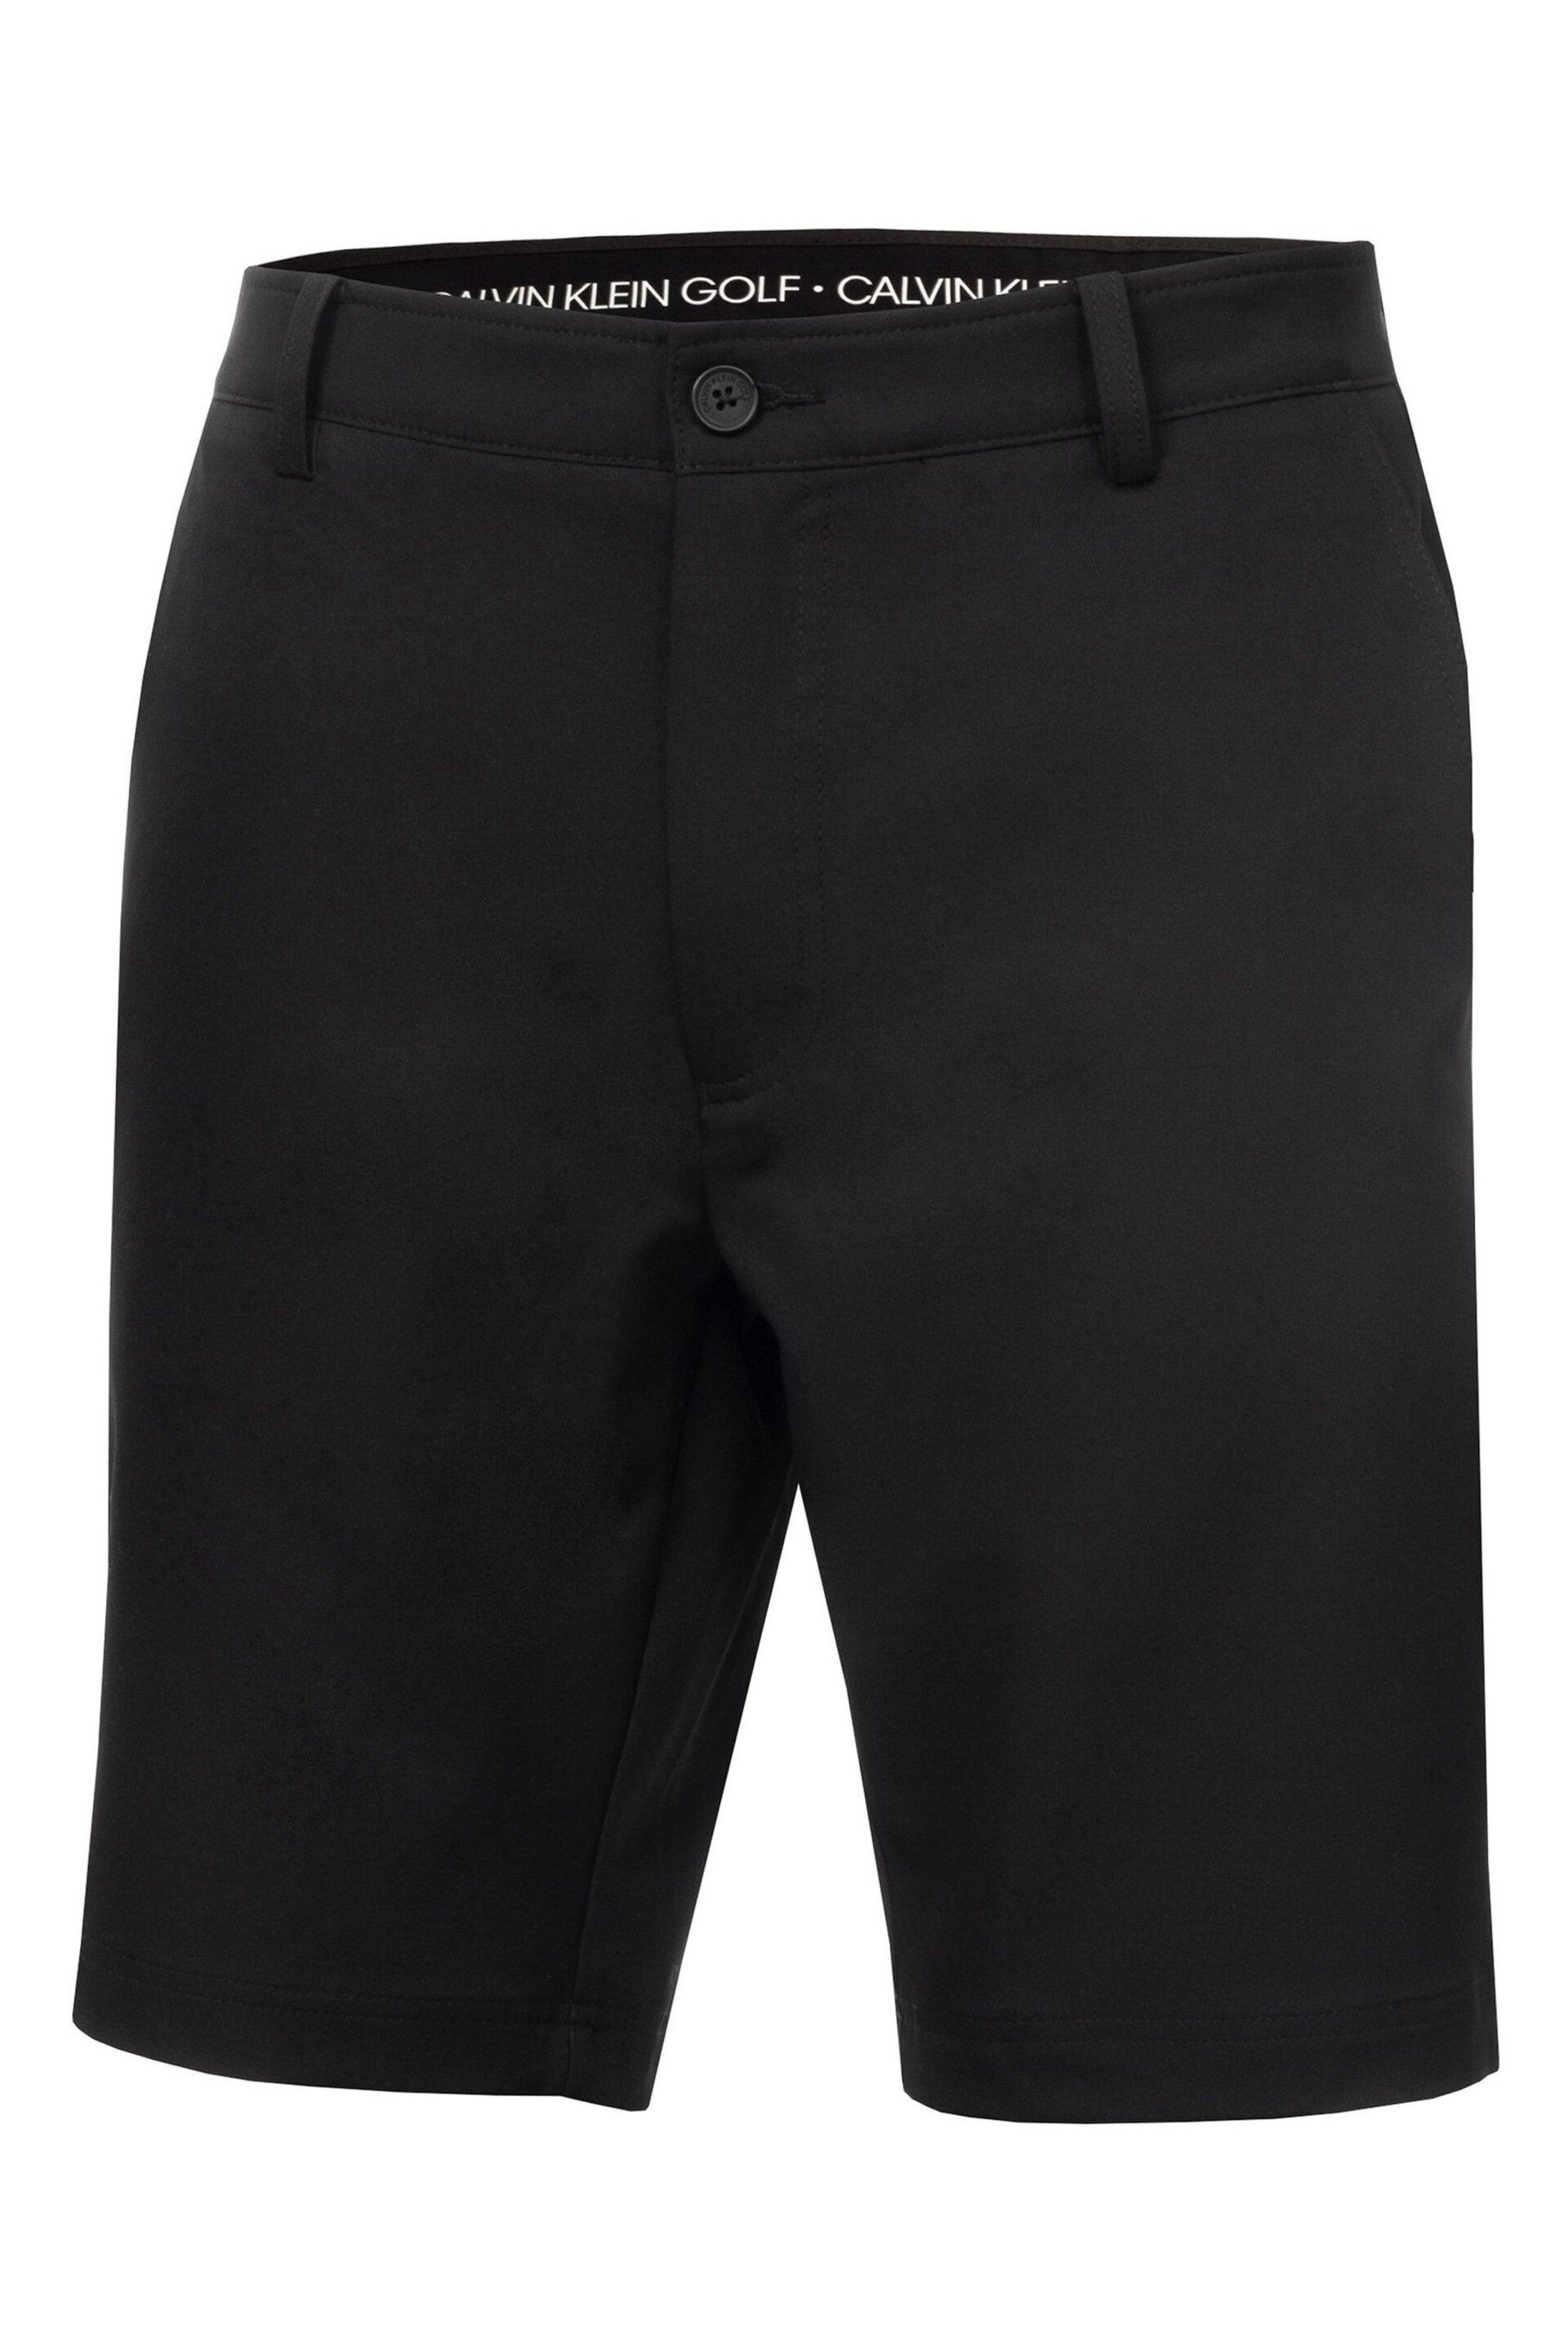 Calvin Klein Golf Bullet Regular Fit Stretch Shorts - Image 8 of 8